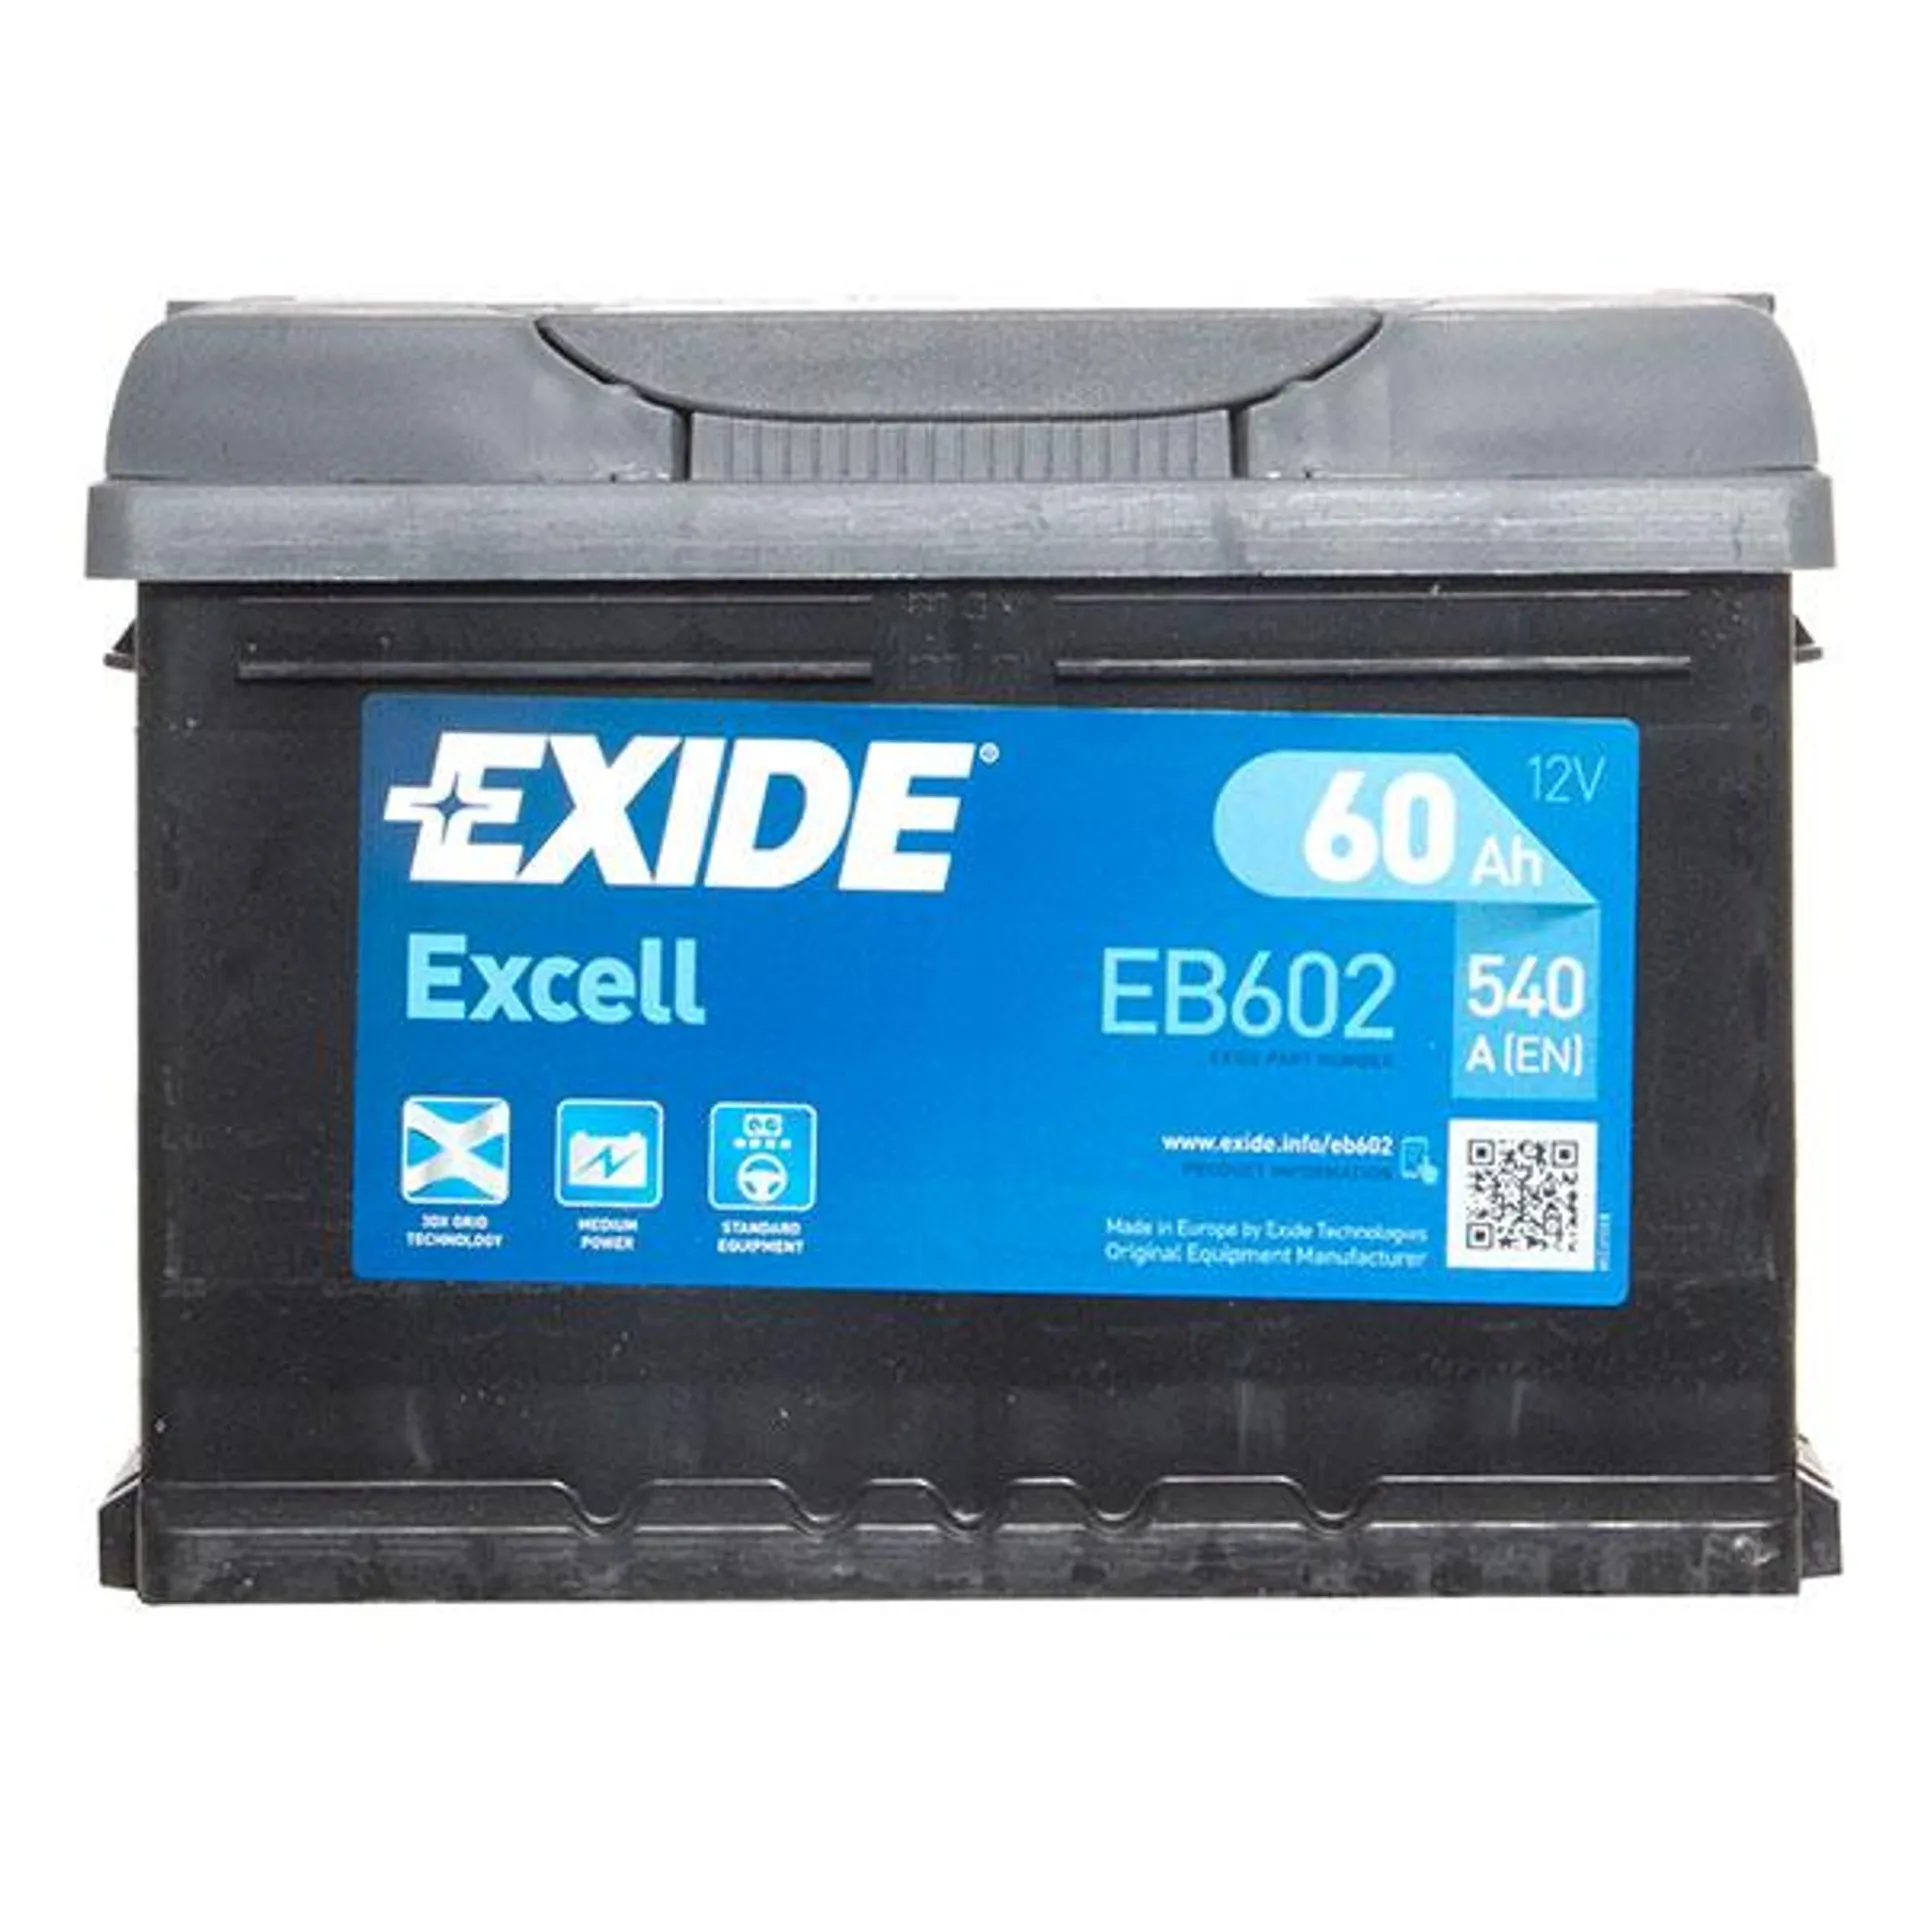 Exide Excel 075 Car Battery - 3 Year Guarantee